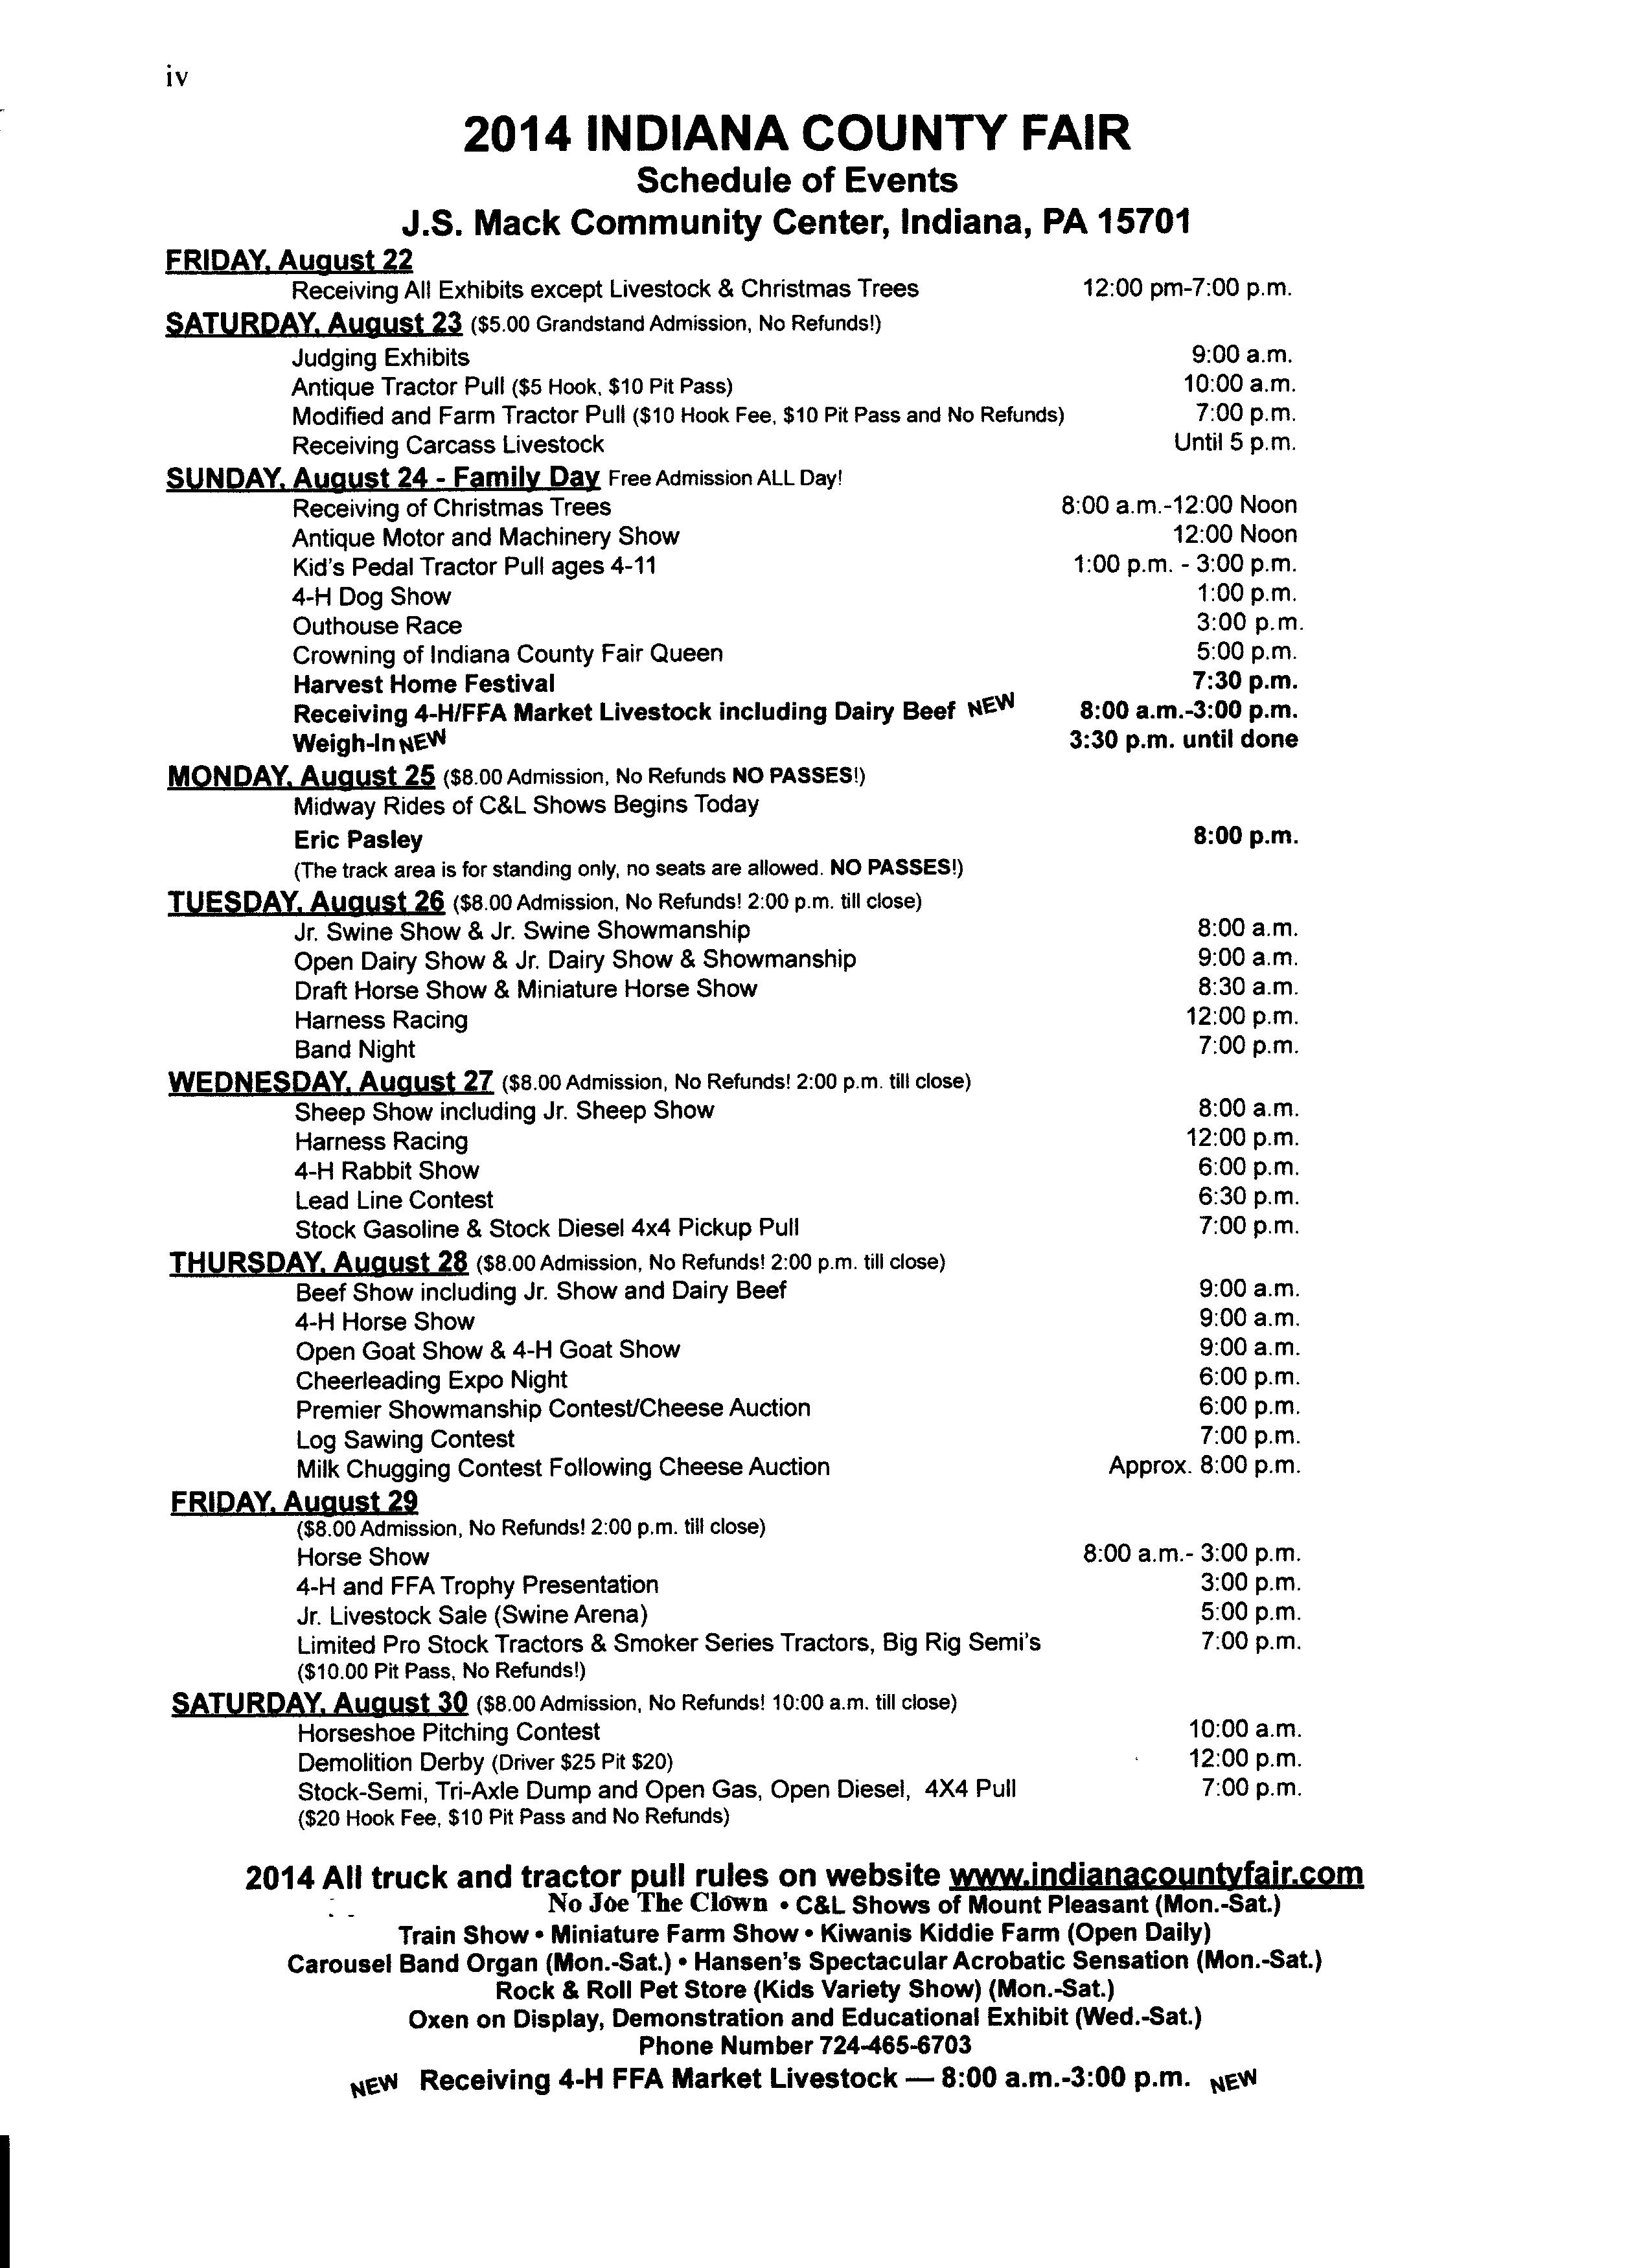 Indiana County Fair Schedule 2014 001 — Indiana County Tourist Bureau